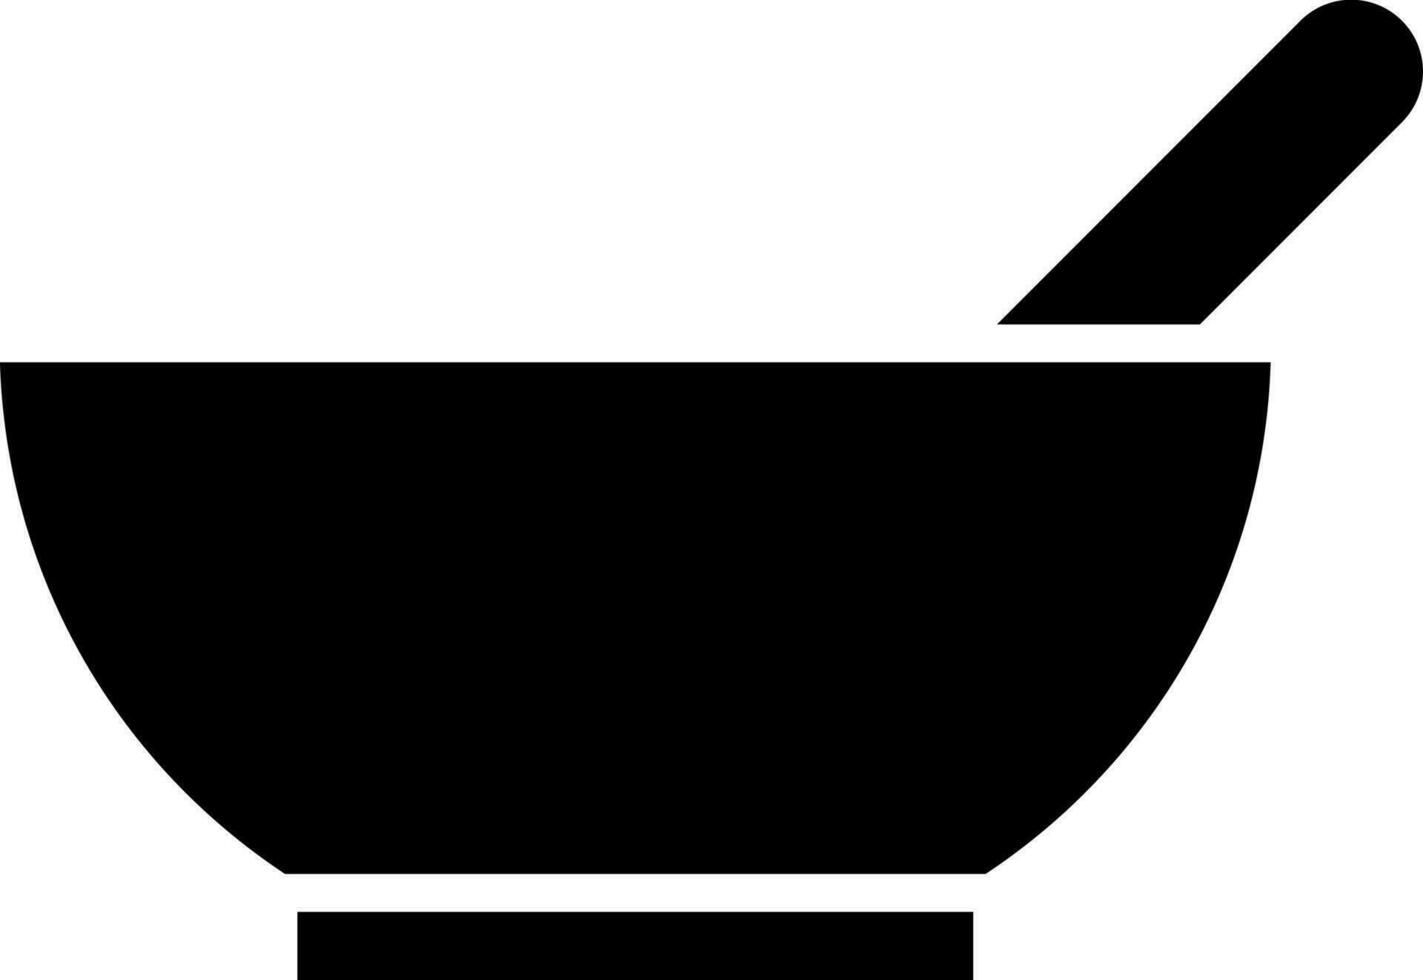 Vektor Illustration von Granatwerfer und Stößel Symbol.